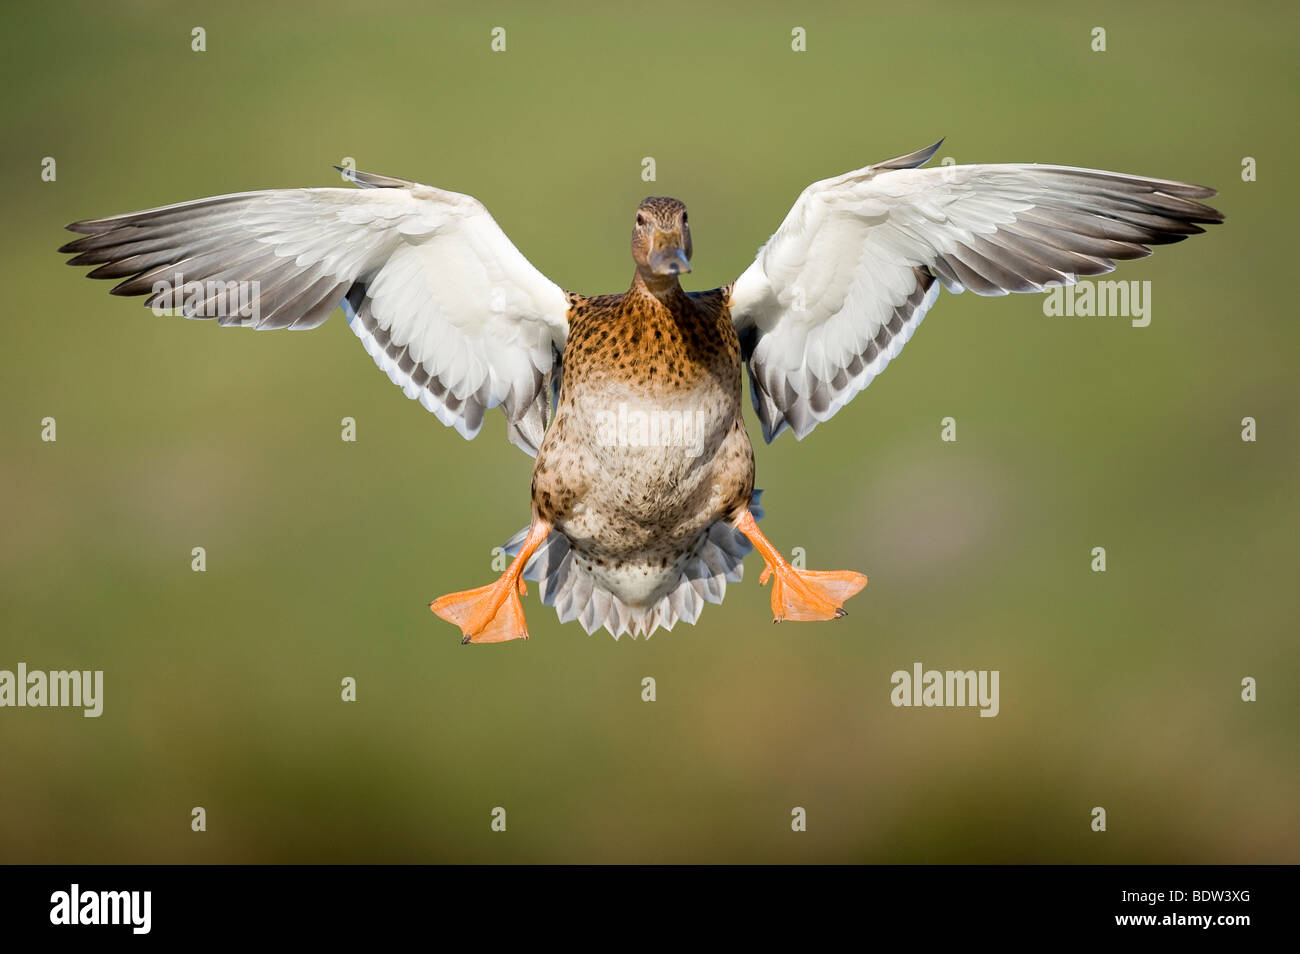 A dabbling duck in landing approach Stock Photo